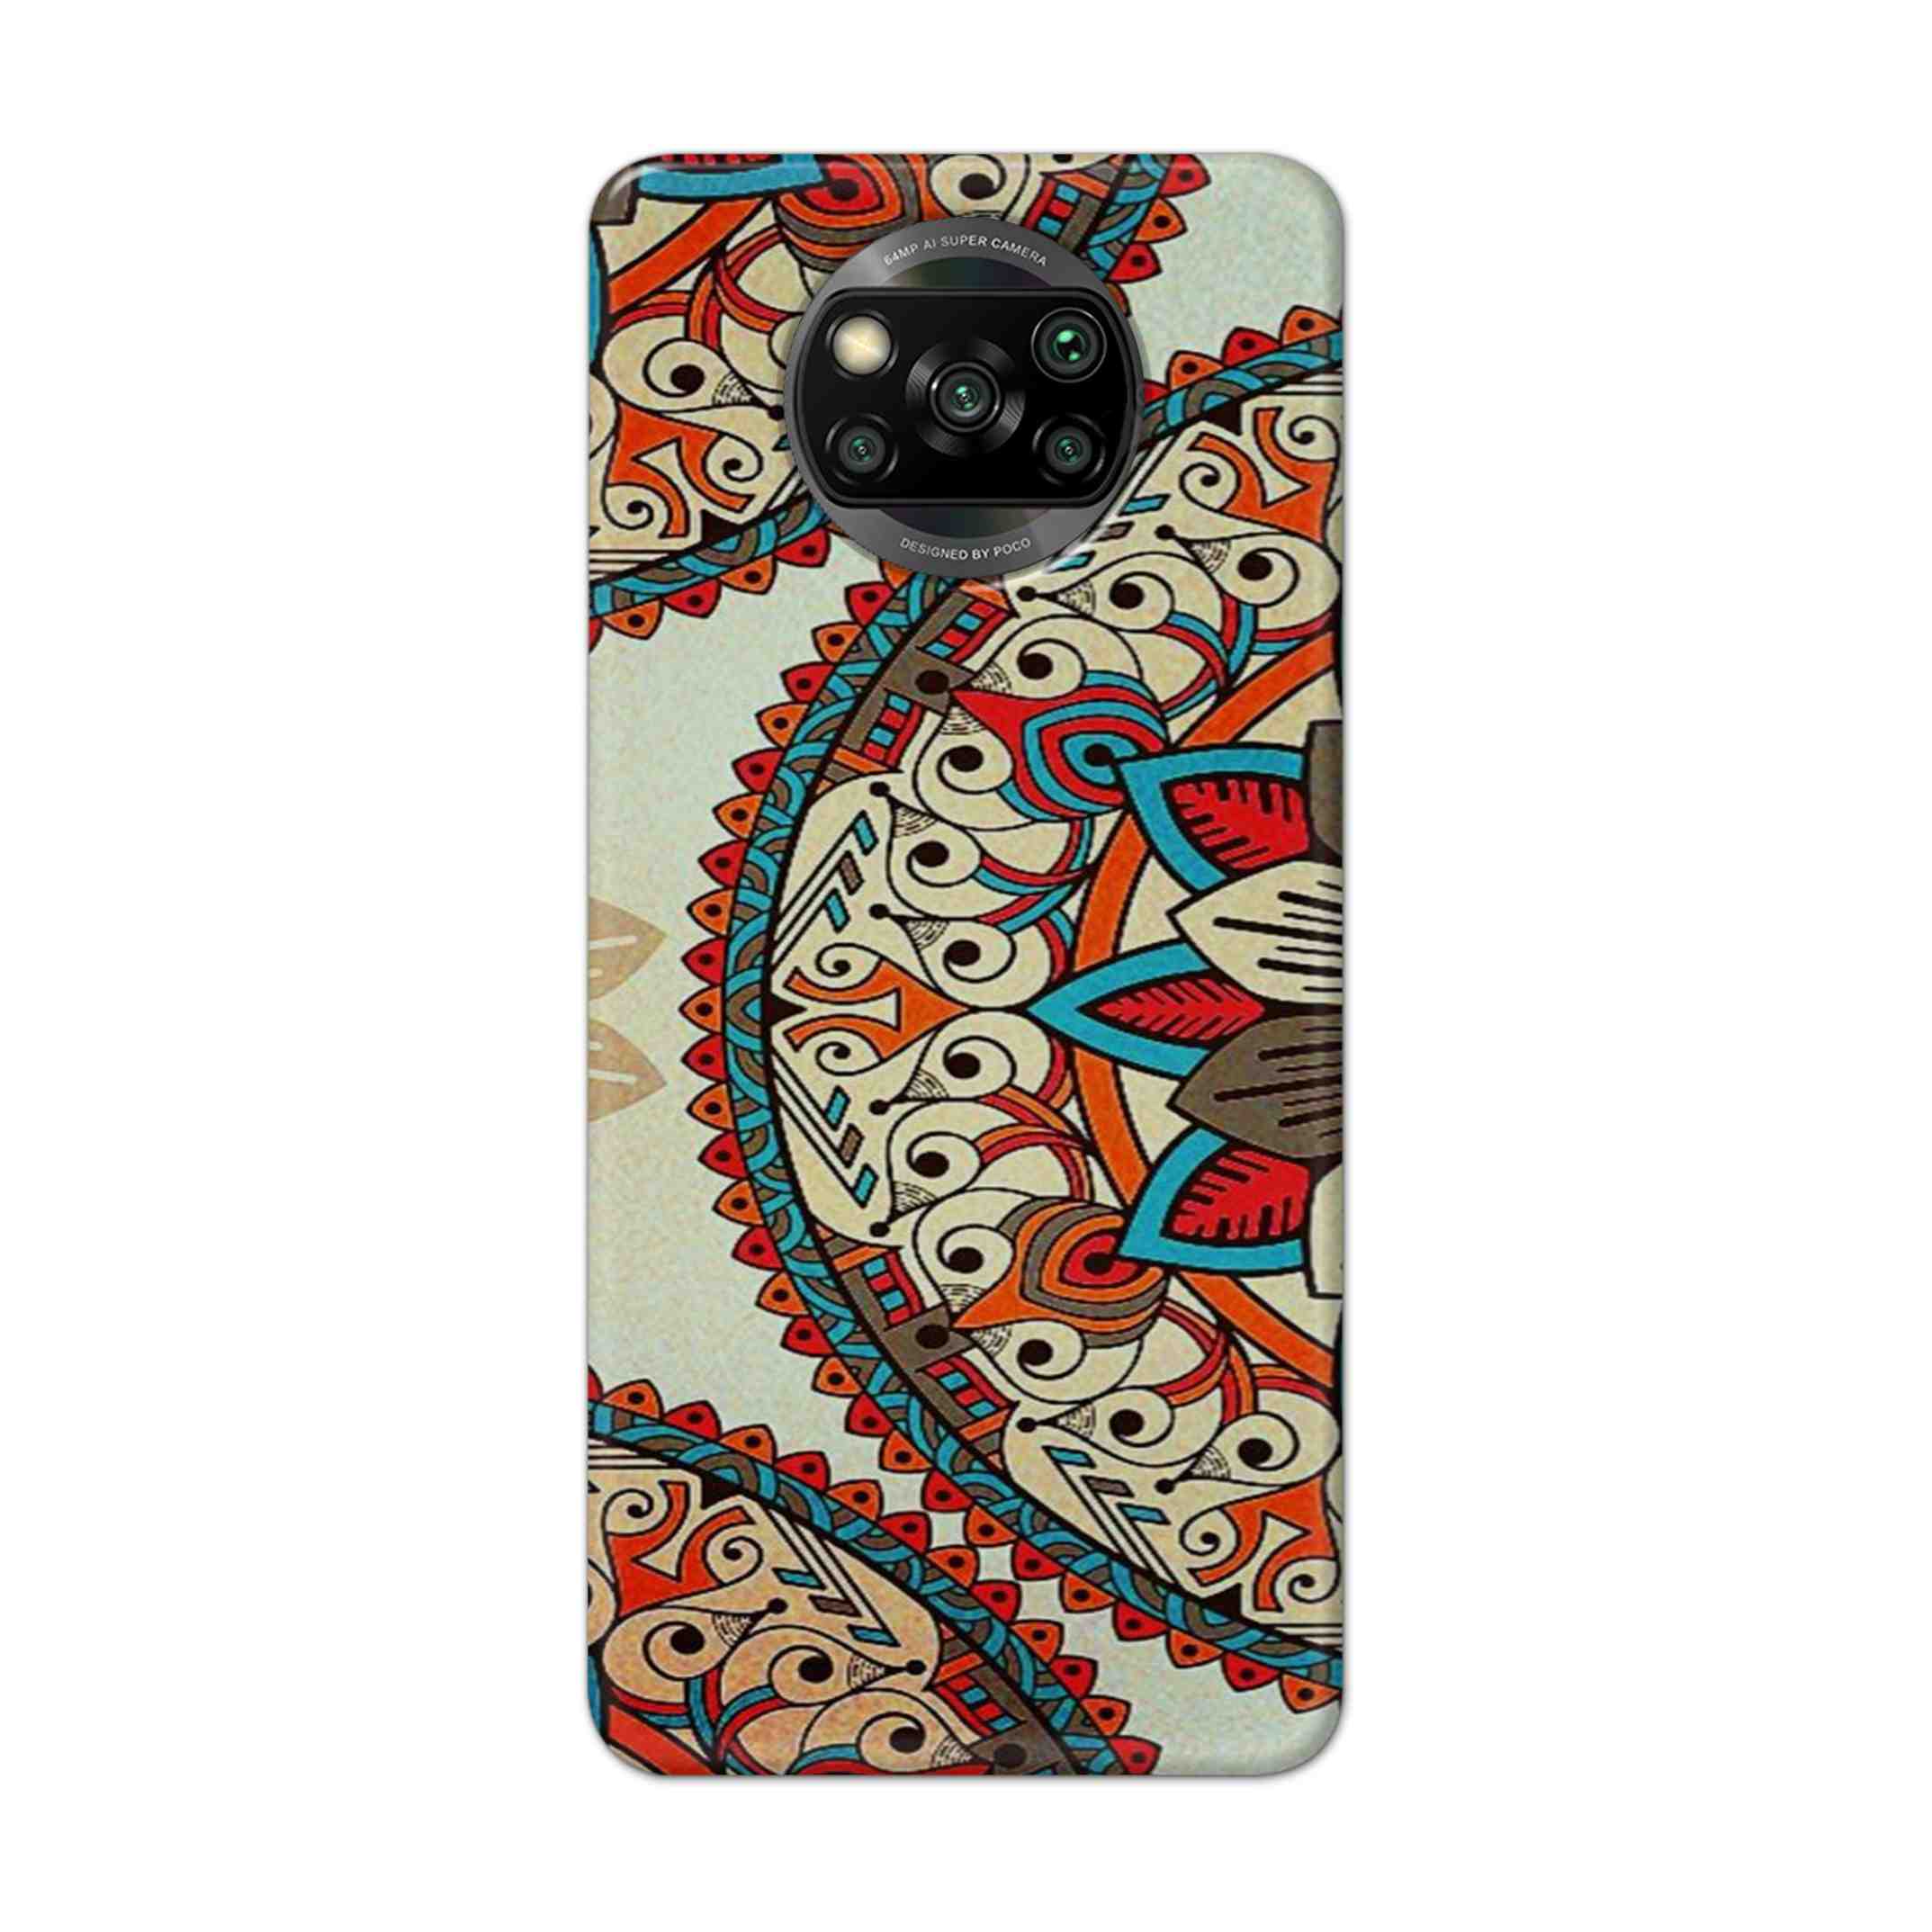 Buy Aztec Mandalas Hard Back Mobile Phone Case Cover For Pcoc X3 NFC Online